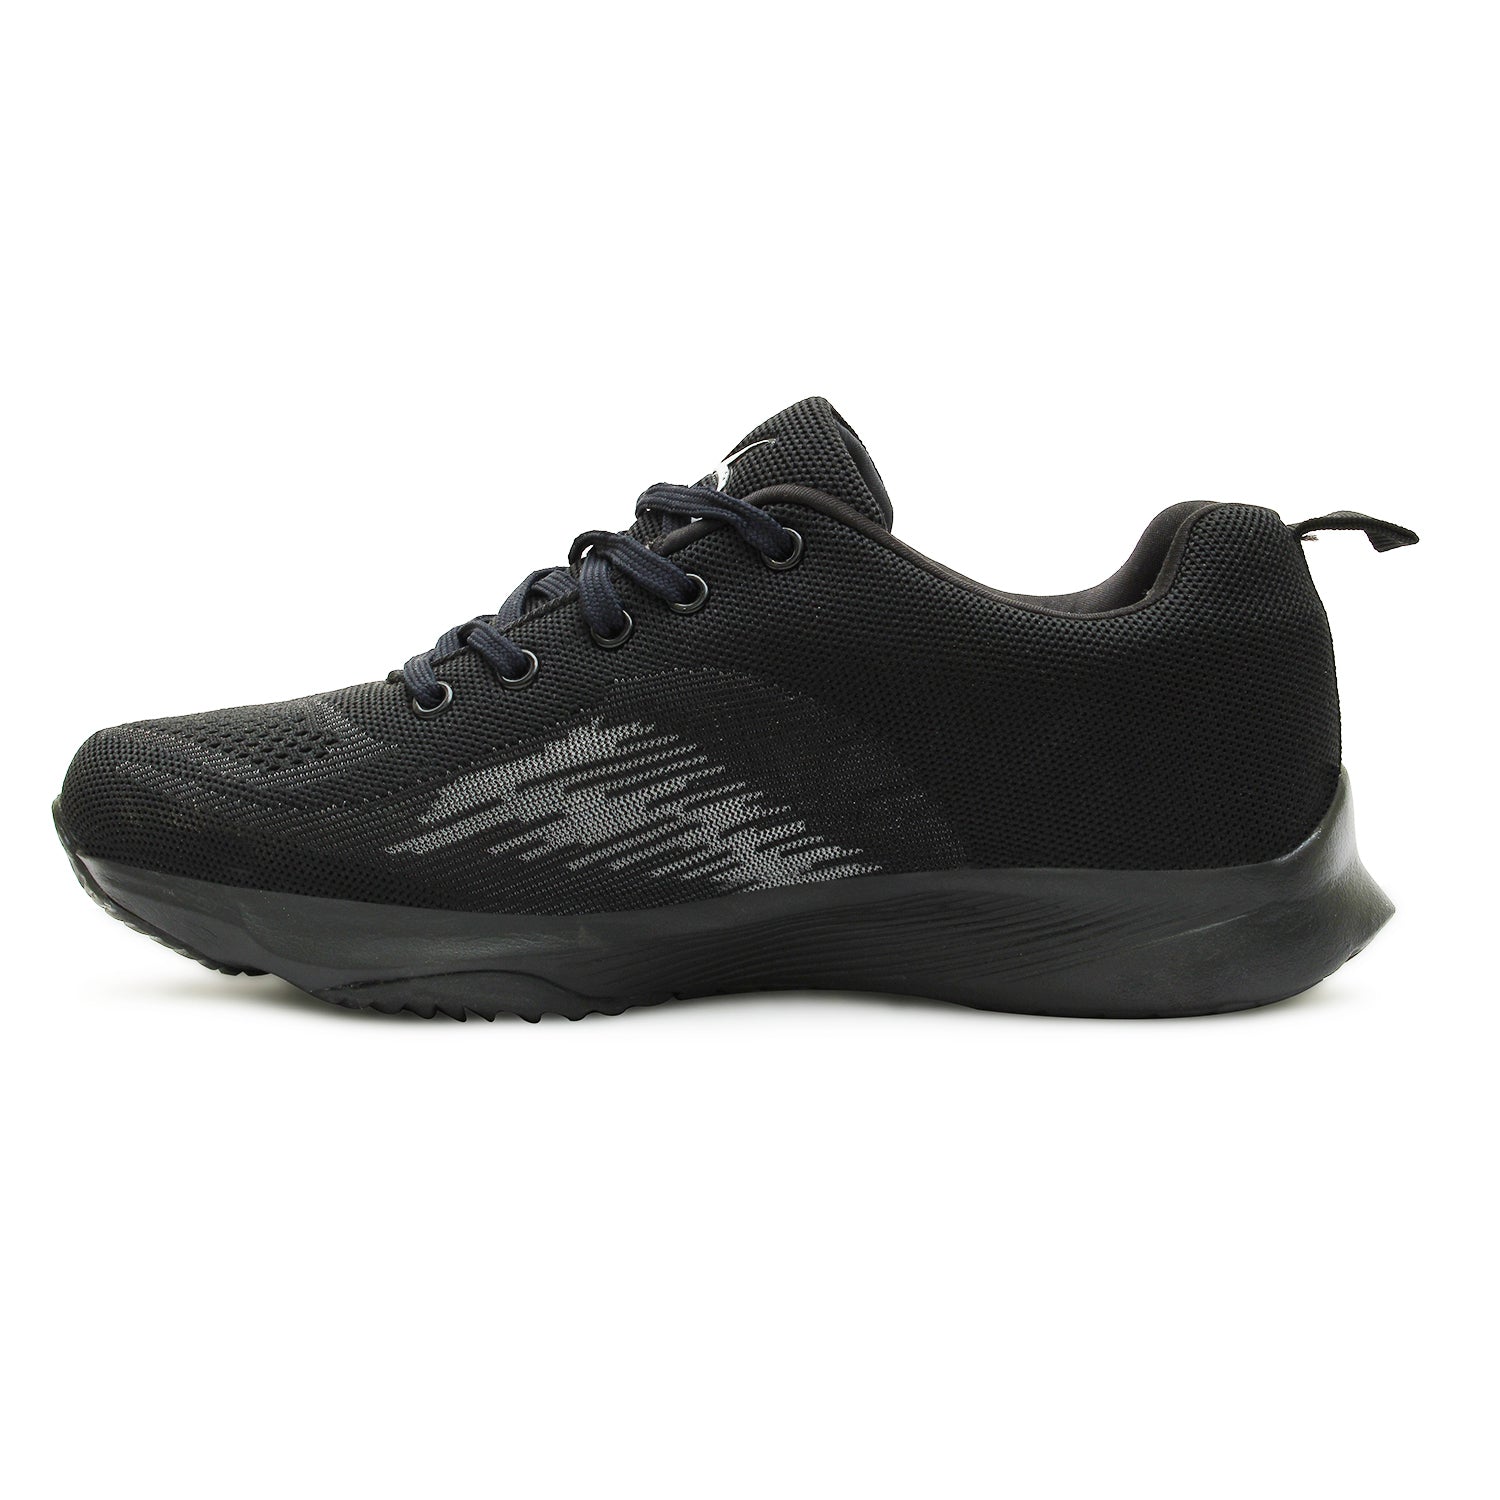 Men's Running Shoes Black